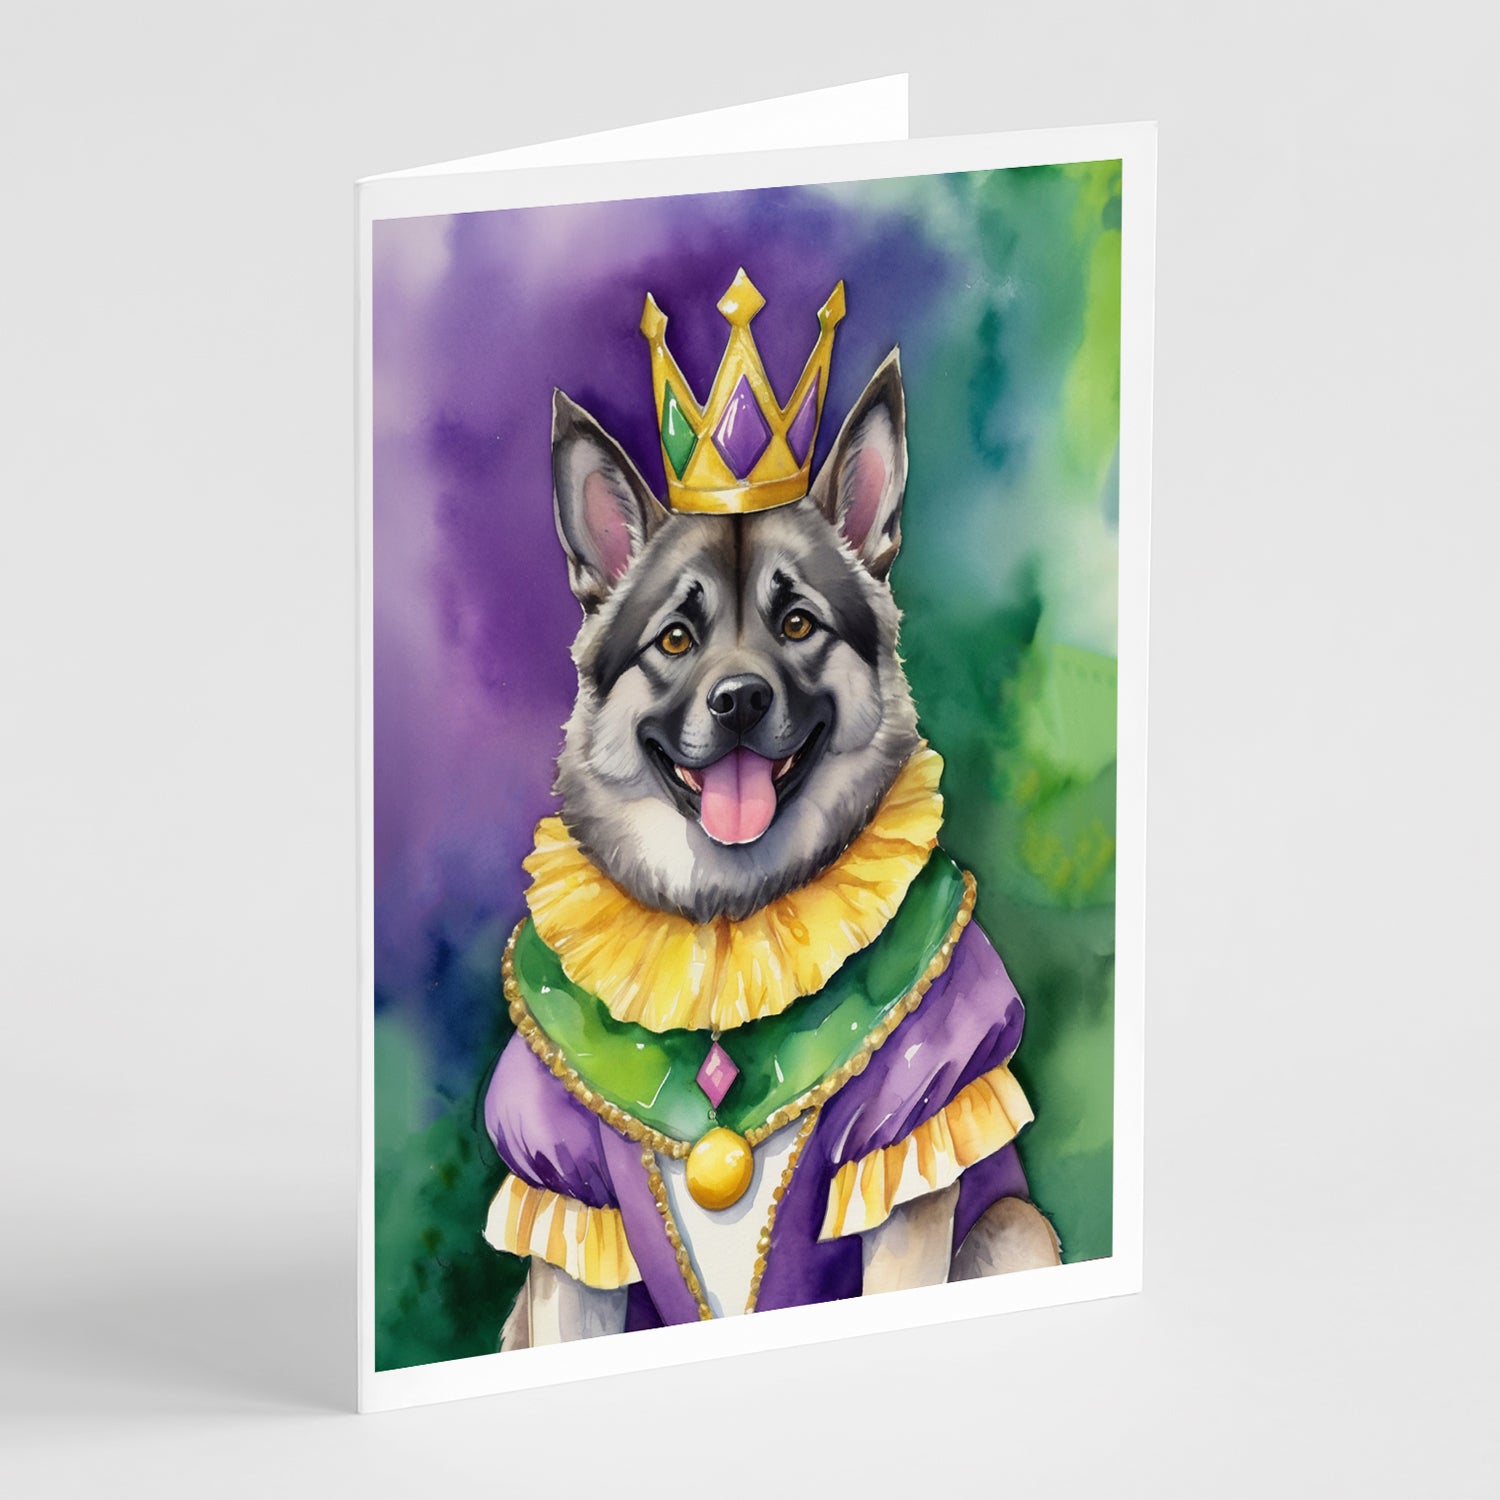 Buy this Norwegian Elkhound King of Mardi Gras Greeting Cards Pack of 8